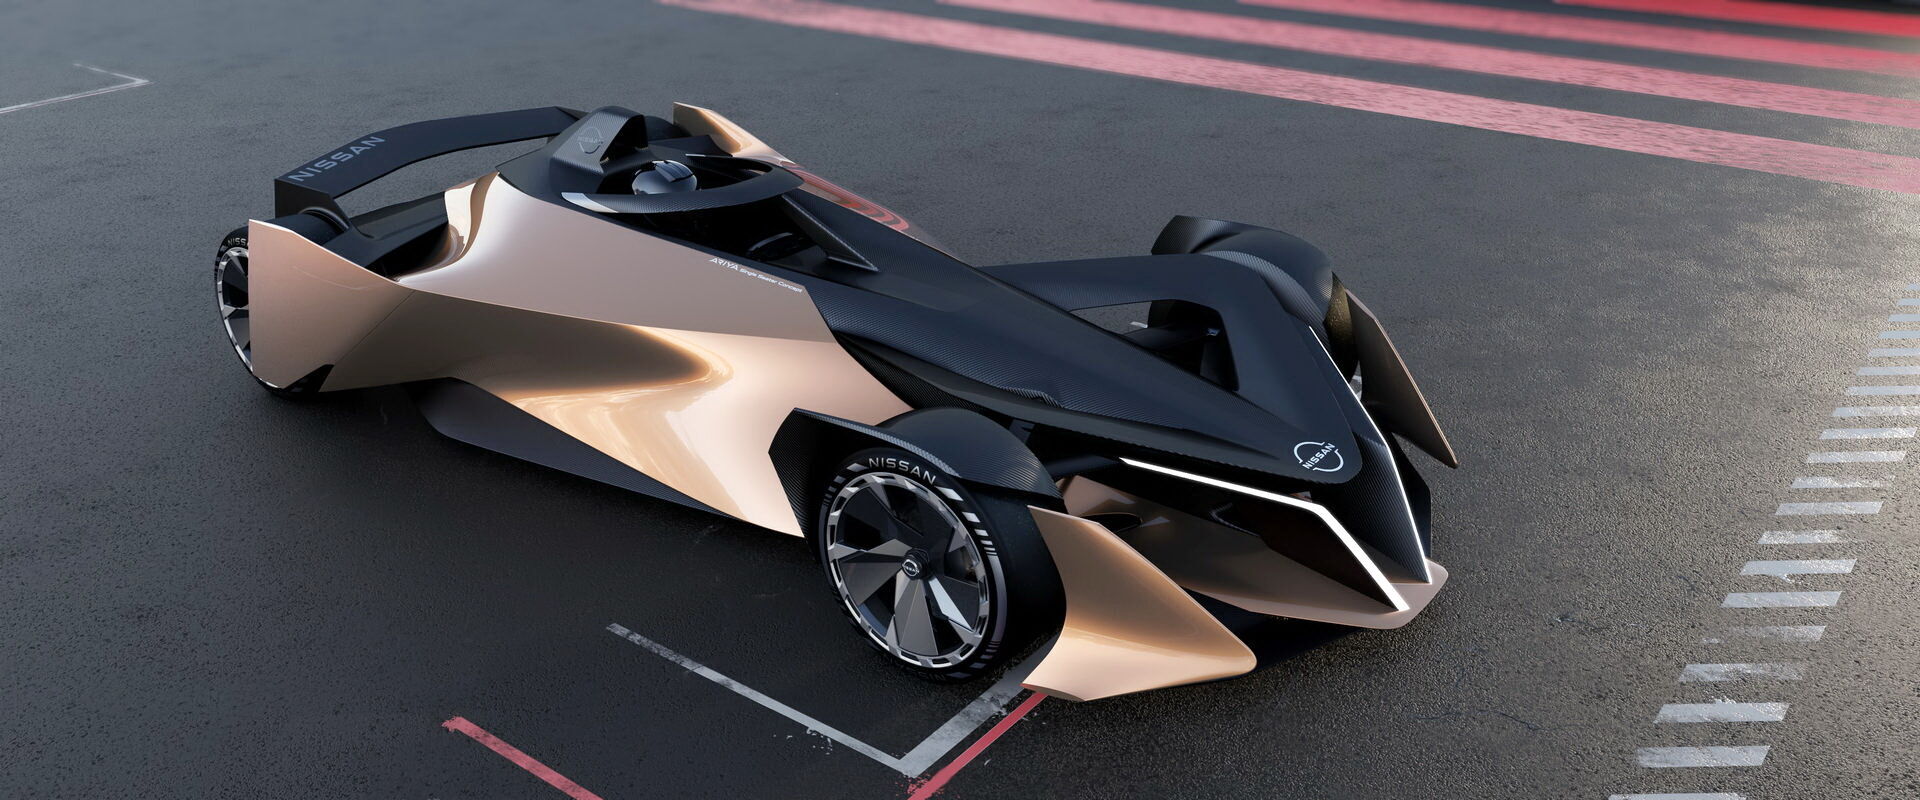 Ariya Single Seater Concept представили на мероприятии Nissan Futures, посвященном новым технологиям